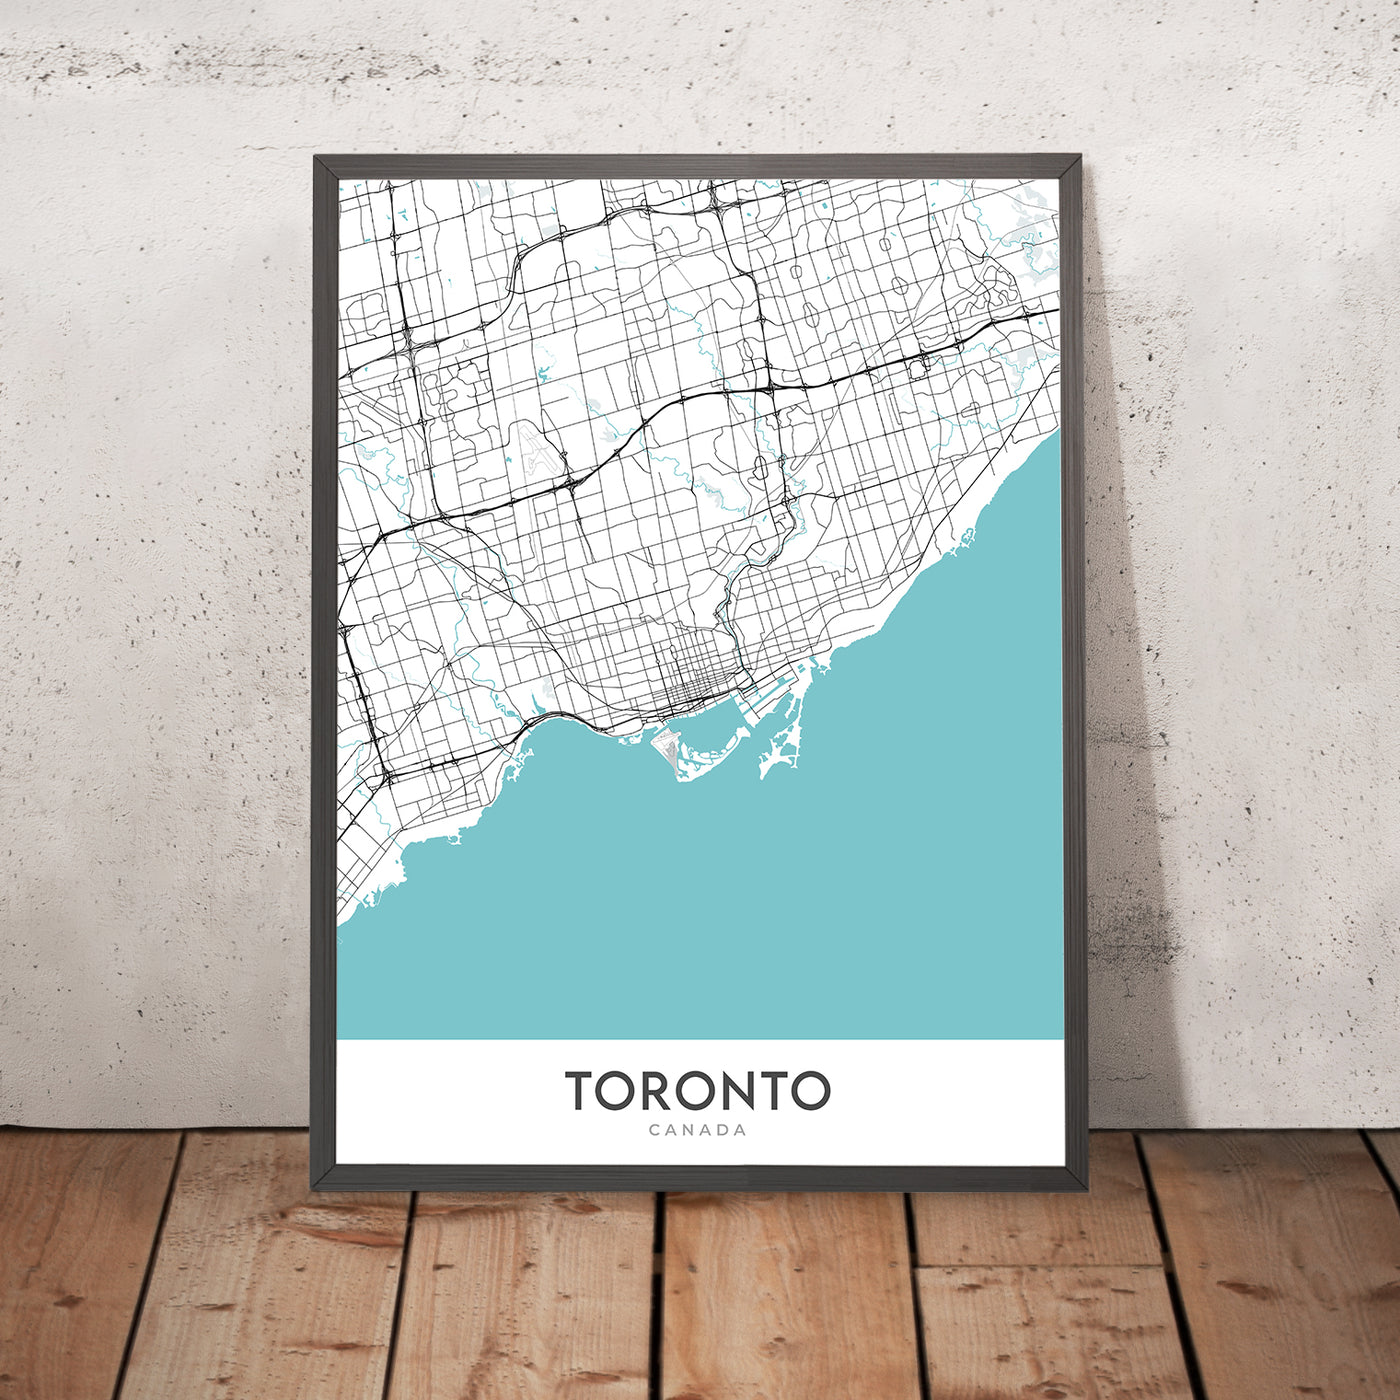 Moderner Stadtplan von Toronto, Kanada: CN Tower, Innenstadt, Kensington Market, Royal Ontario Museum, Toronto Islands